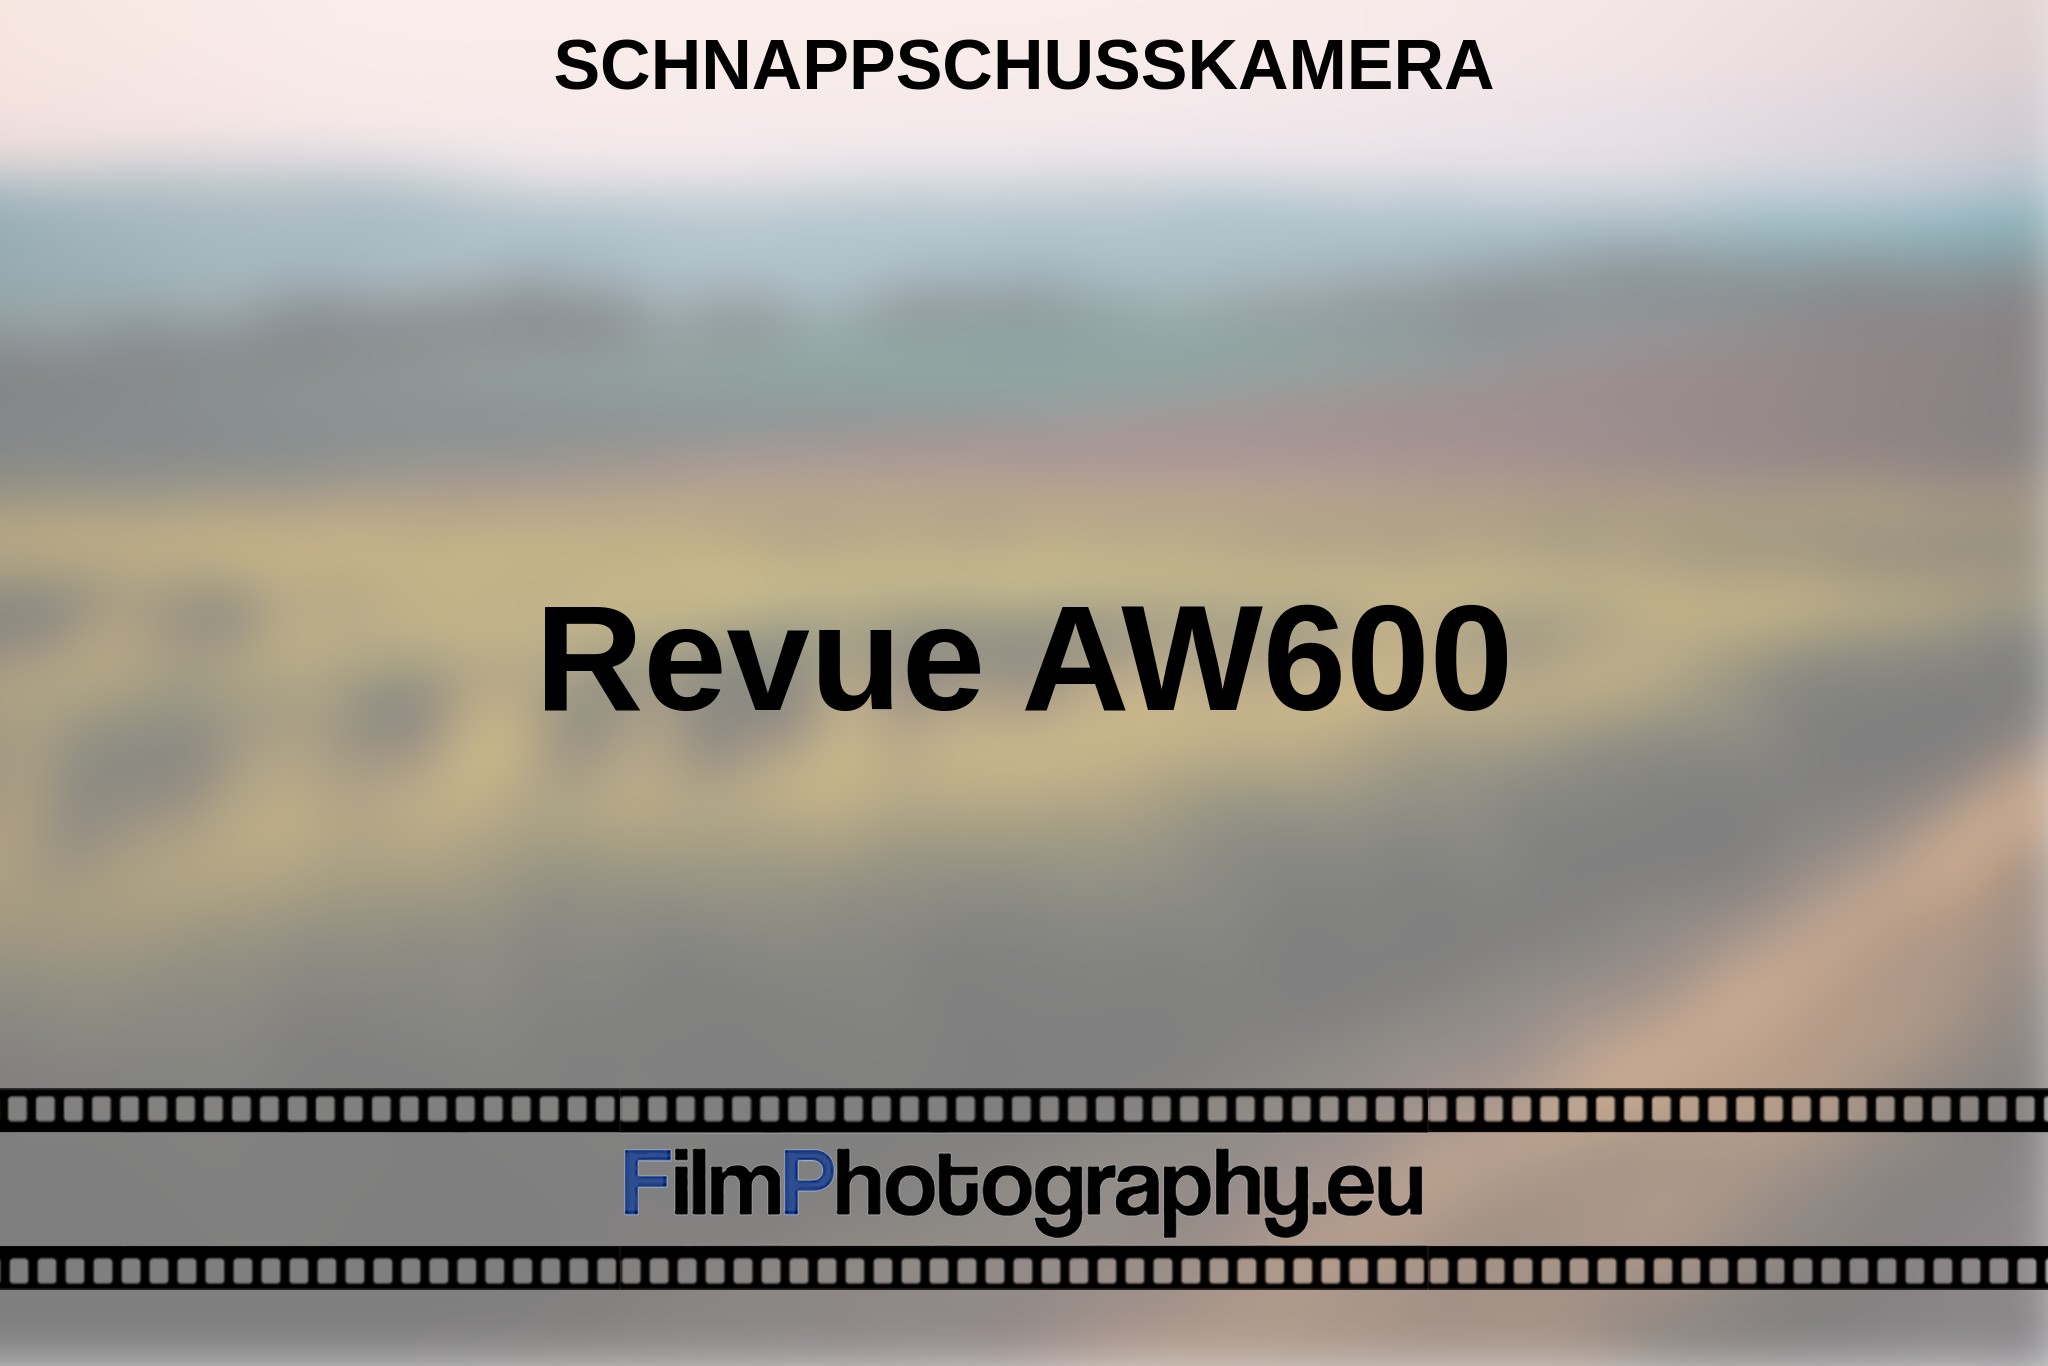 revue-aw600-schnappschusskamera-bnv.jpg